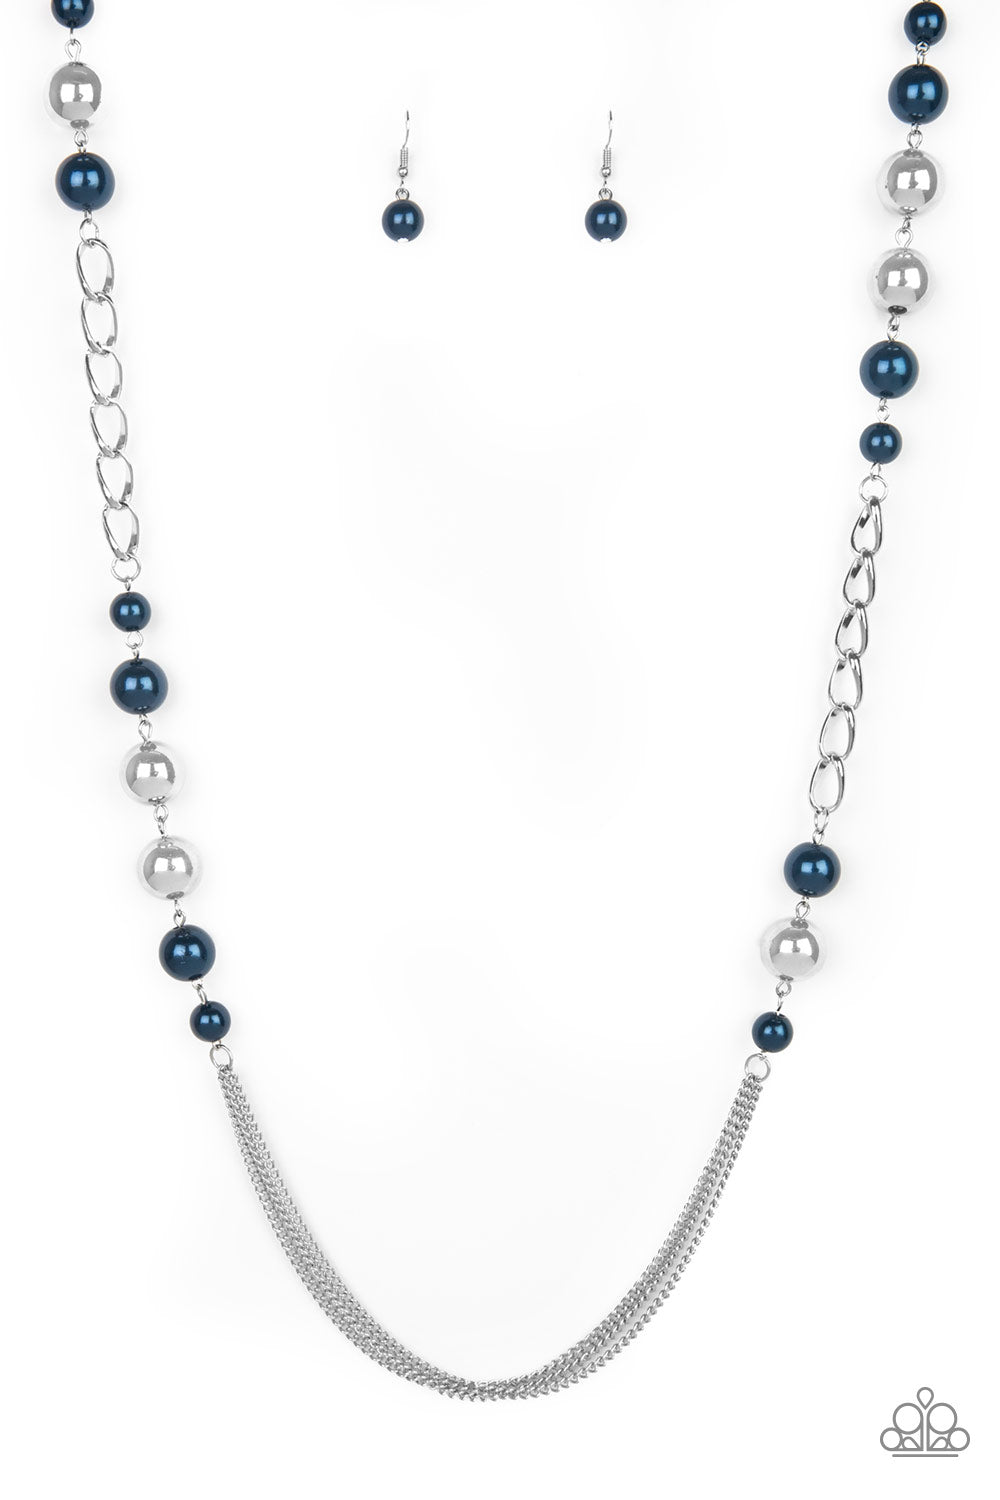 Uptown Talker - Blue Necklace freeshipping - JewLz4u Gemstone Gallery